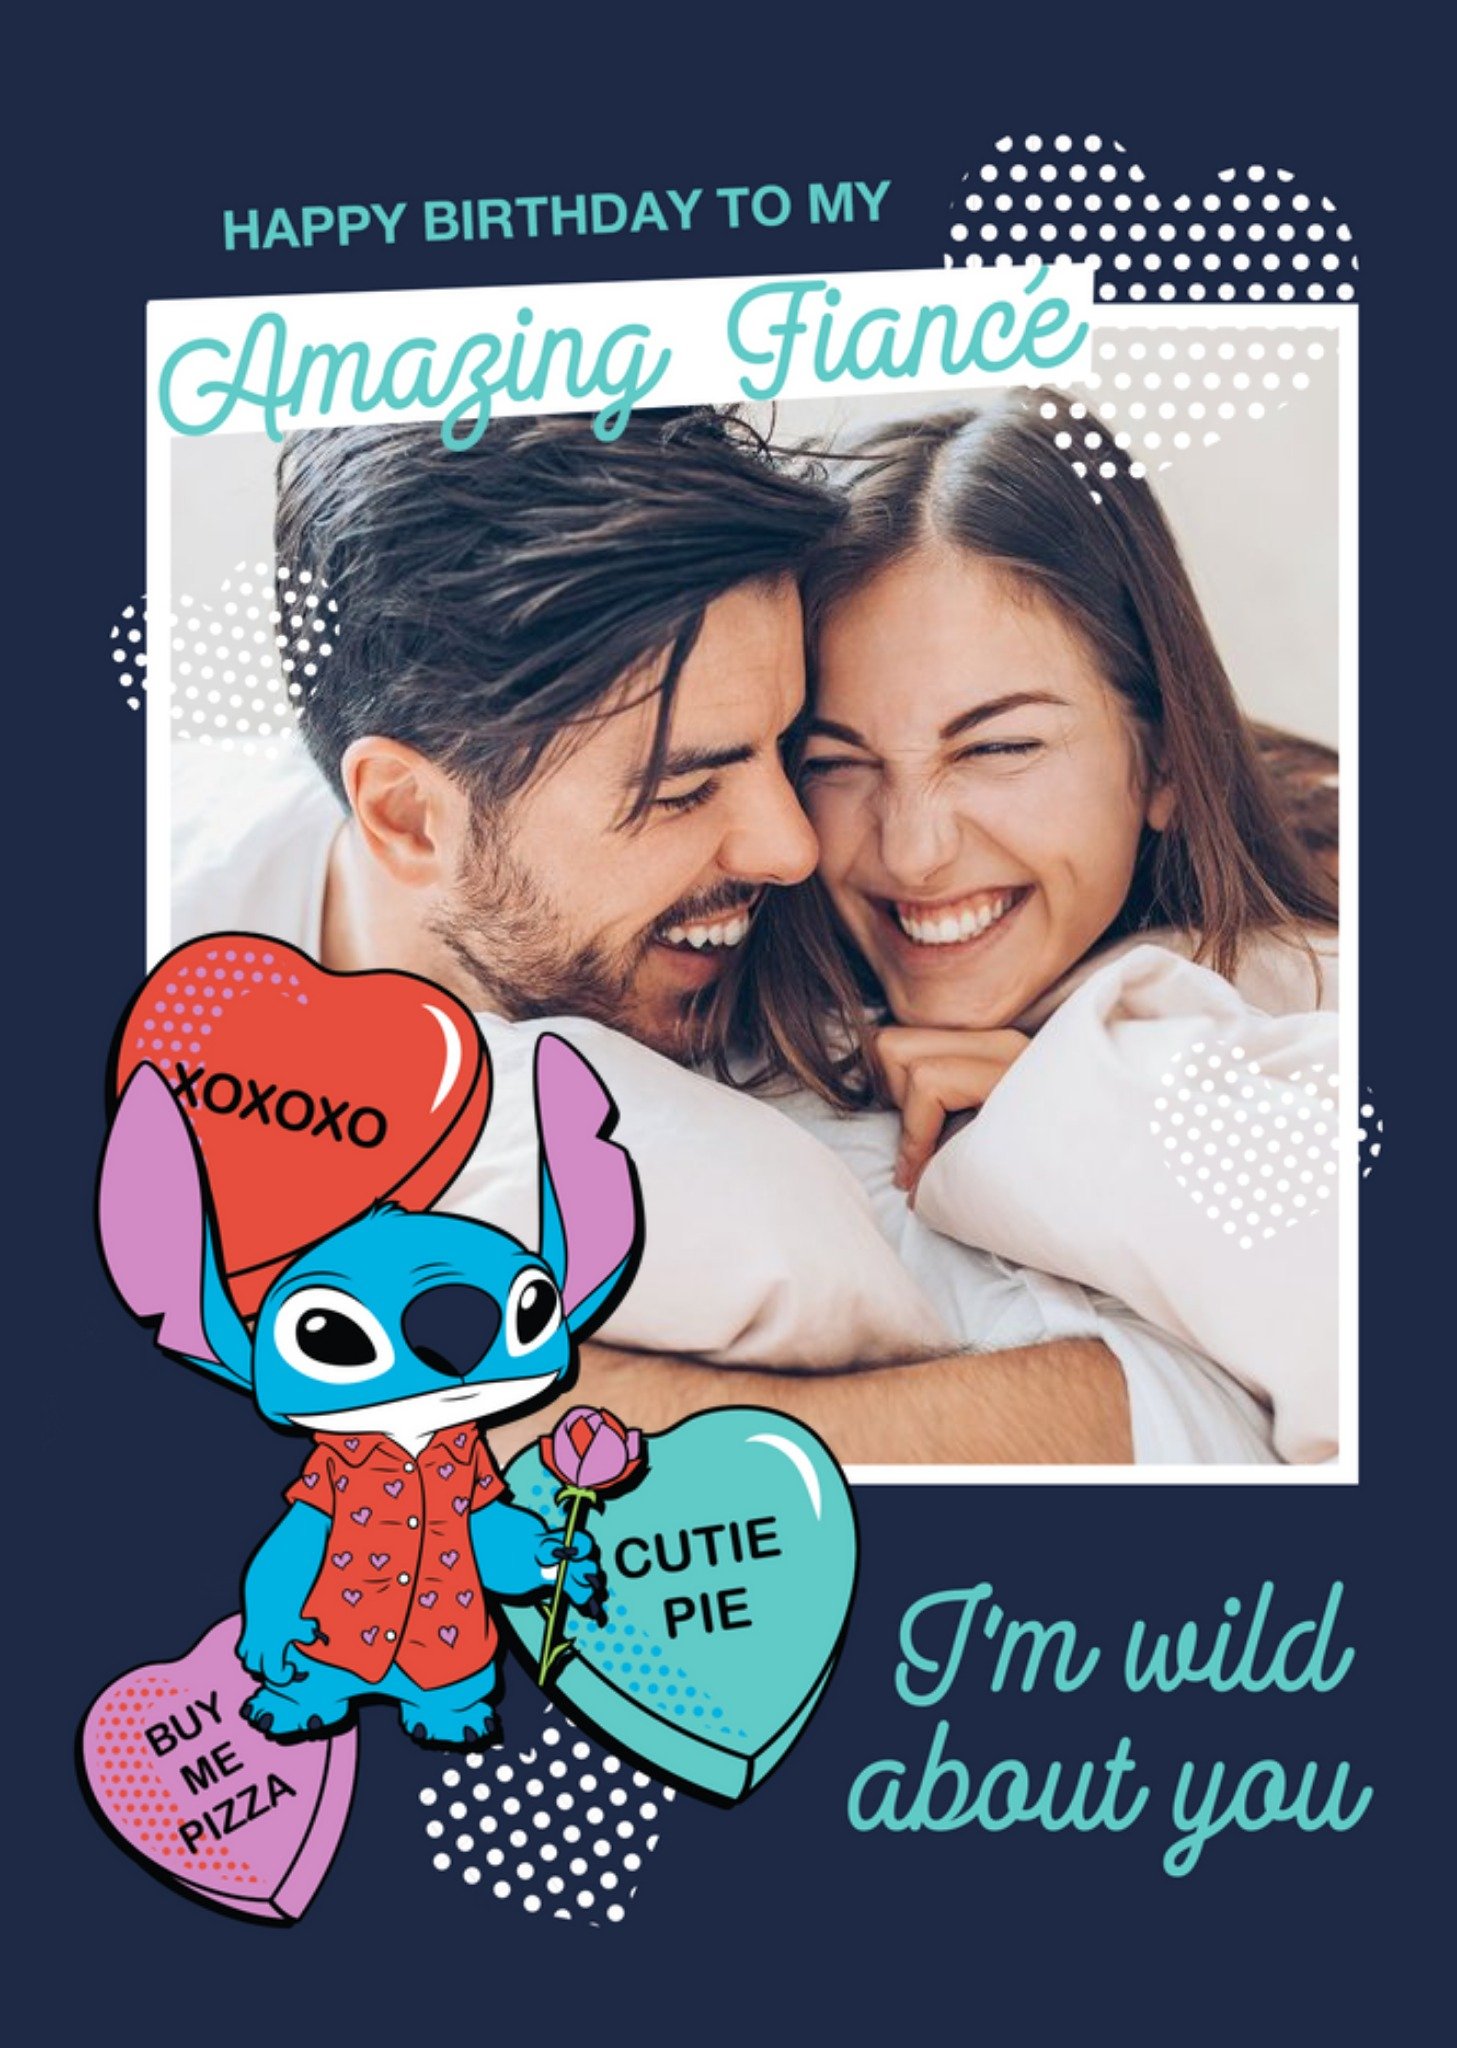 Disney Lilo And Stitch Love Hearts Candy Fiance Birthday Card Ecard